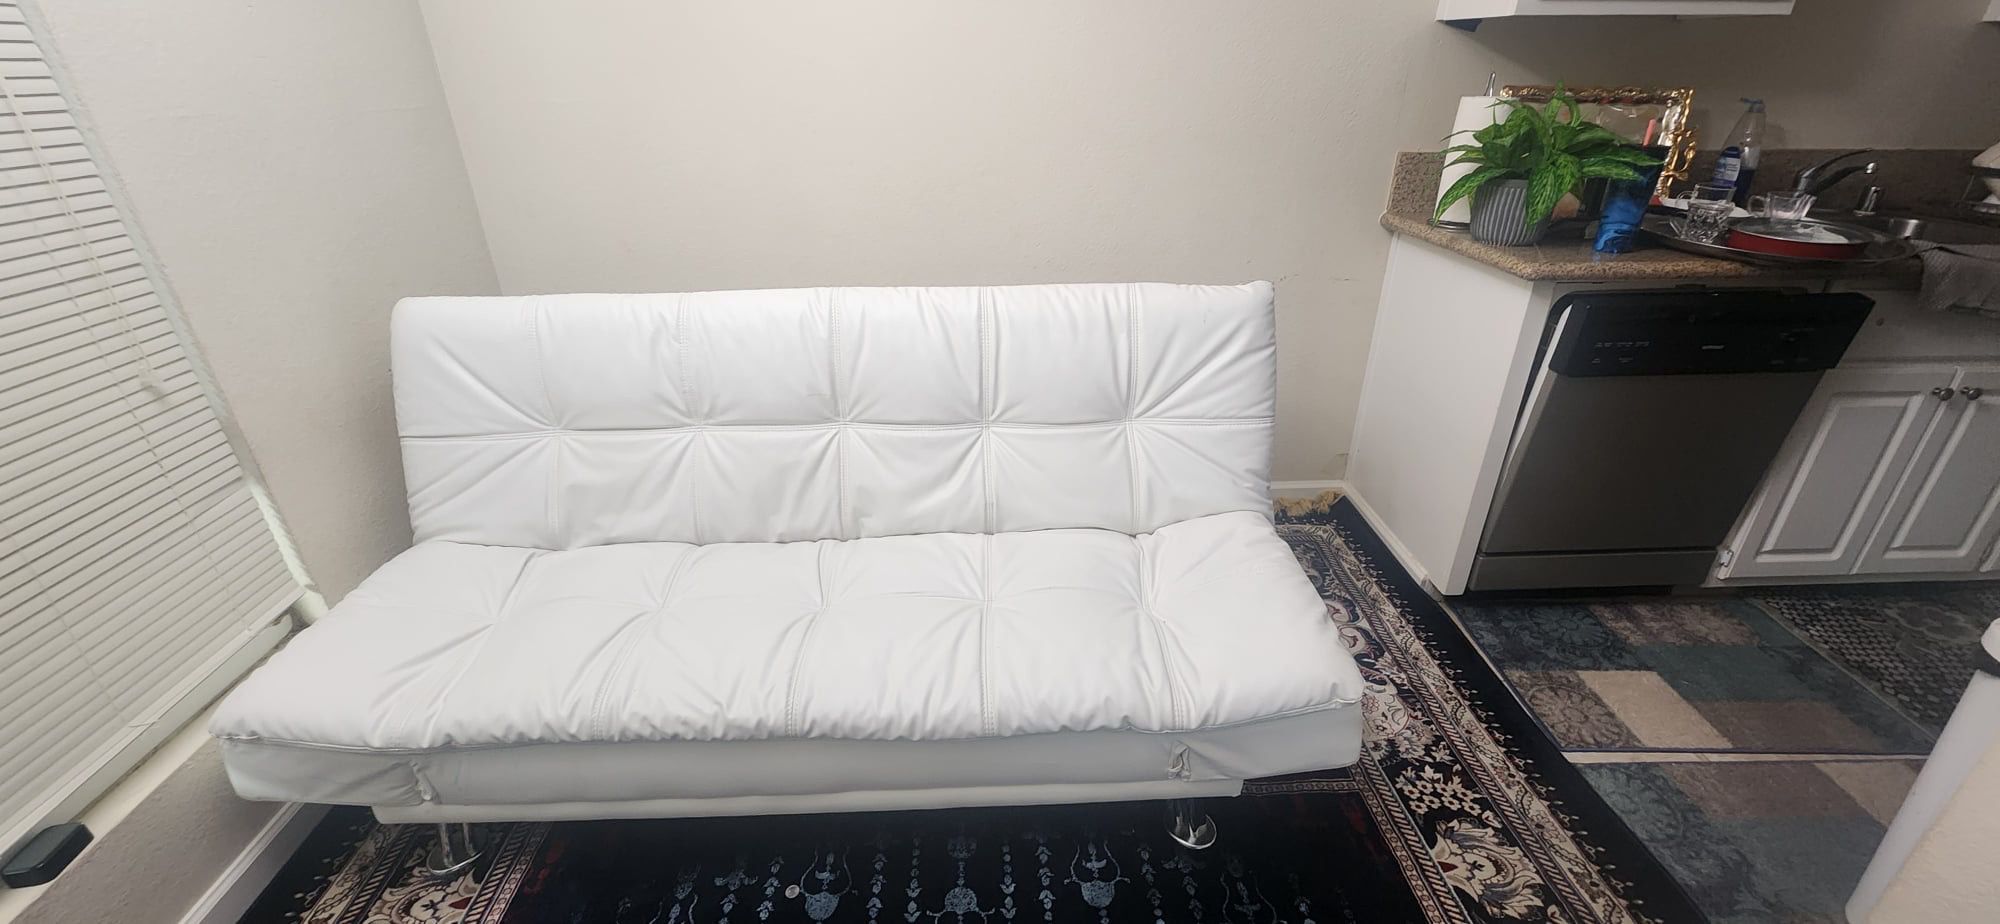 Sofa Couch And Sleeper Sofa